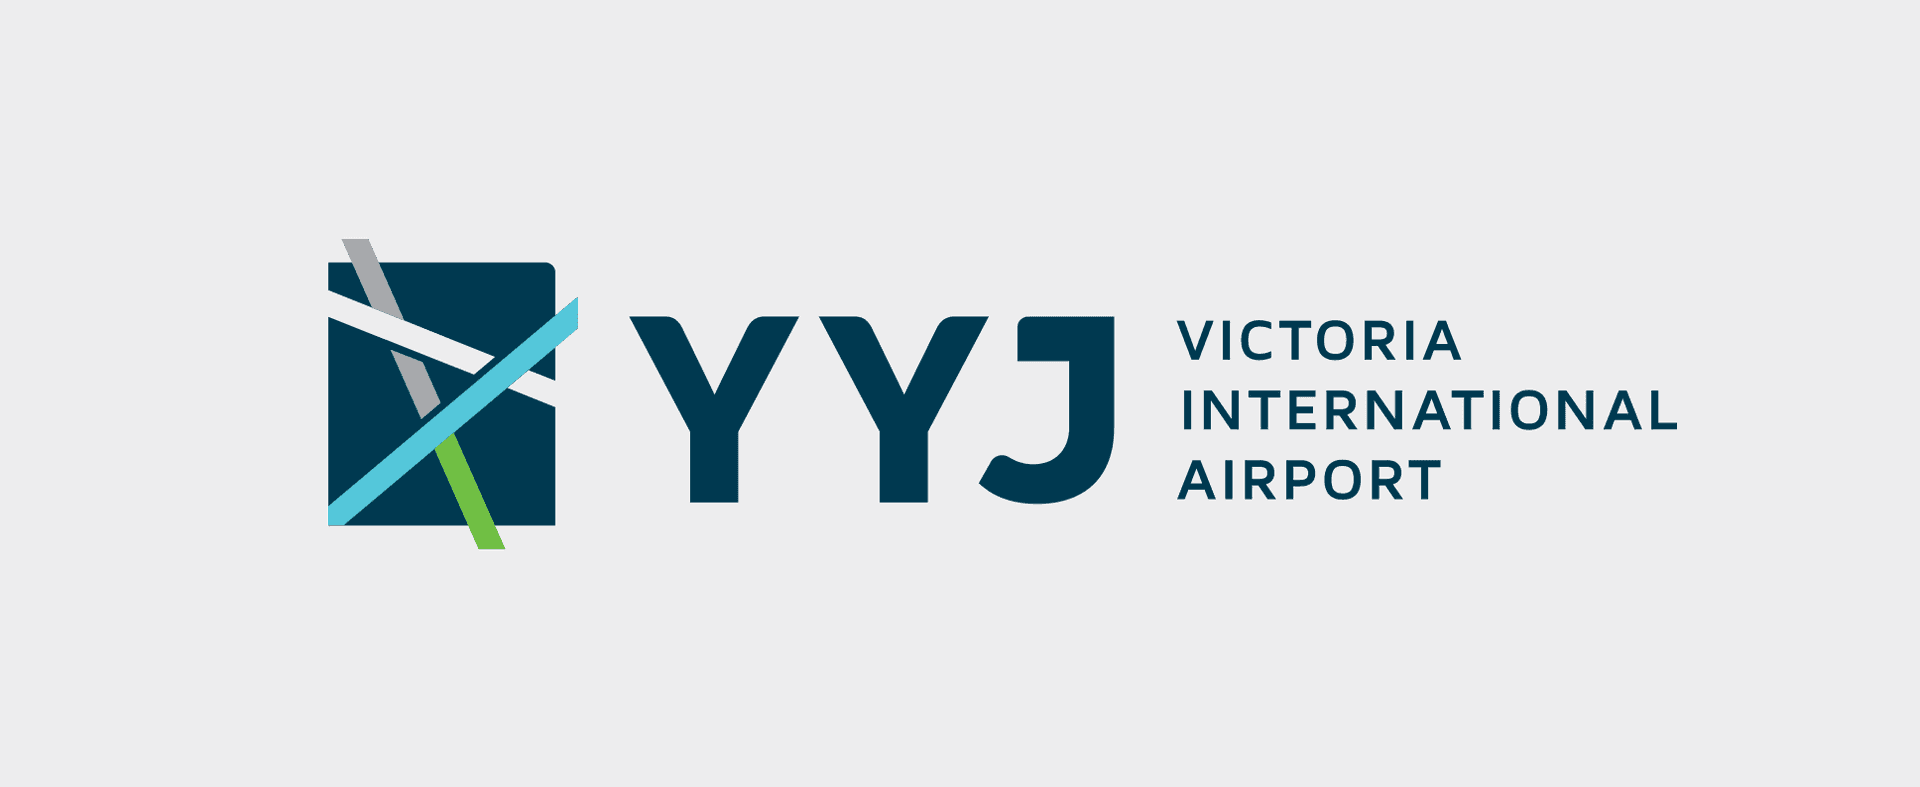 yyj victoria international airport logo